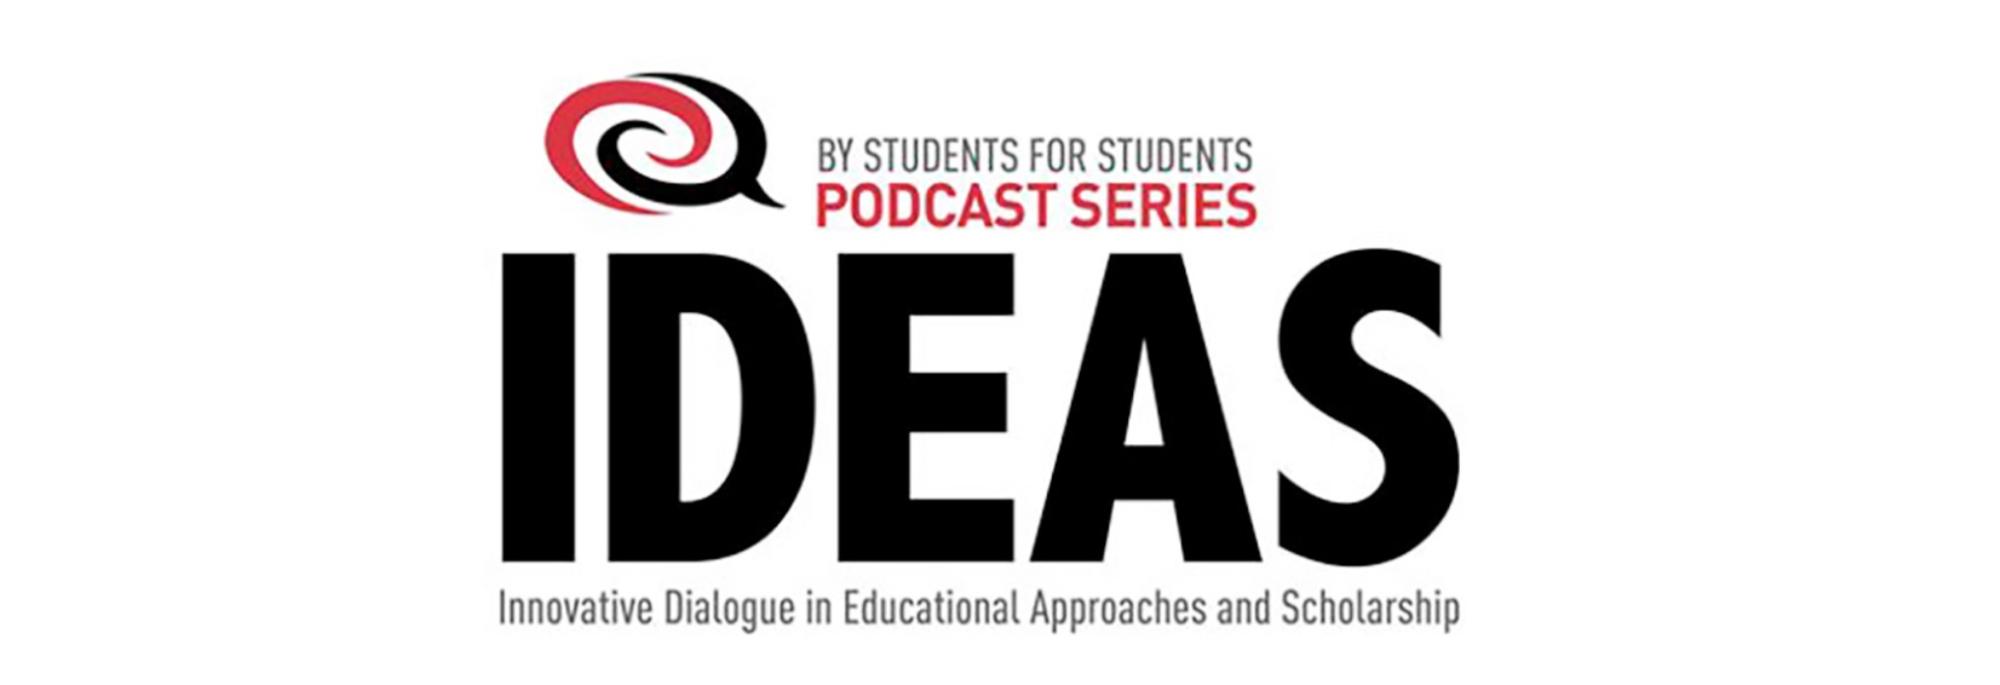 Listen here: IDEAS Podcast